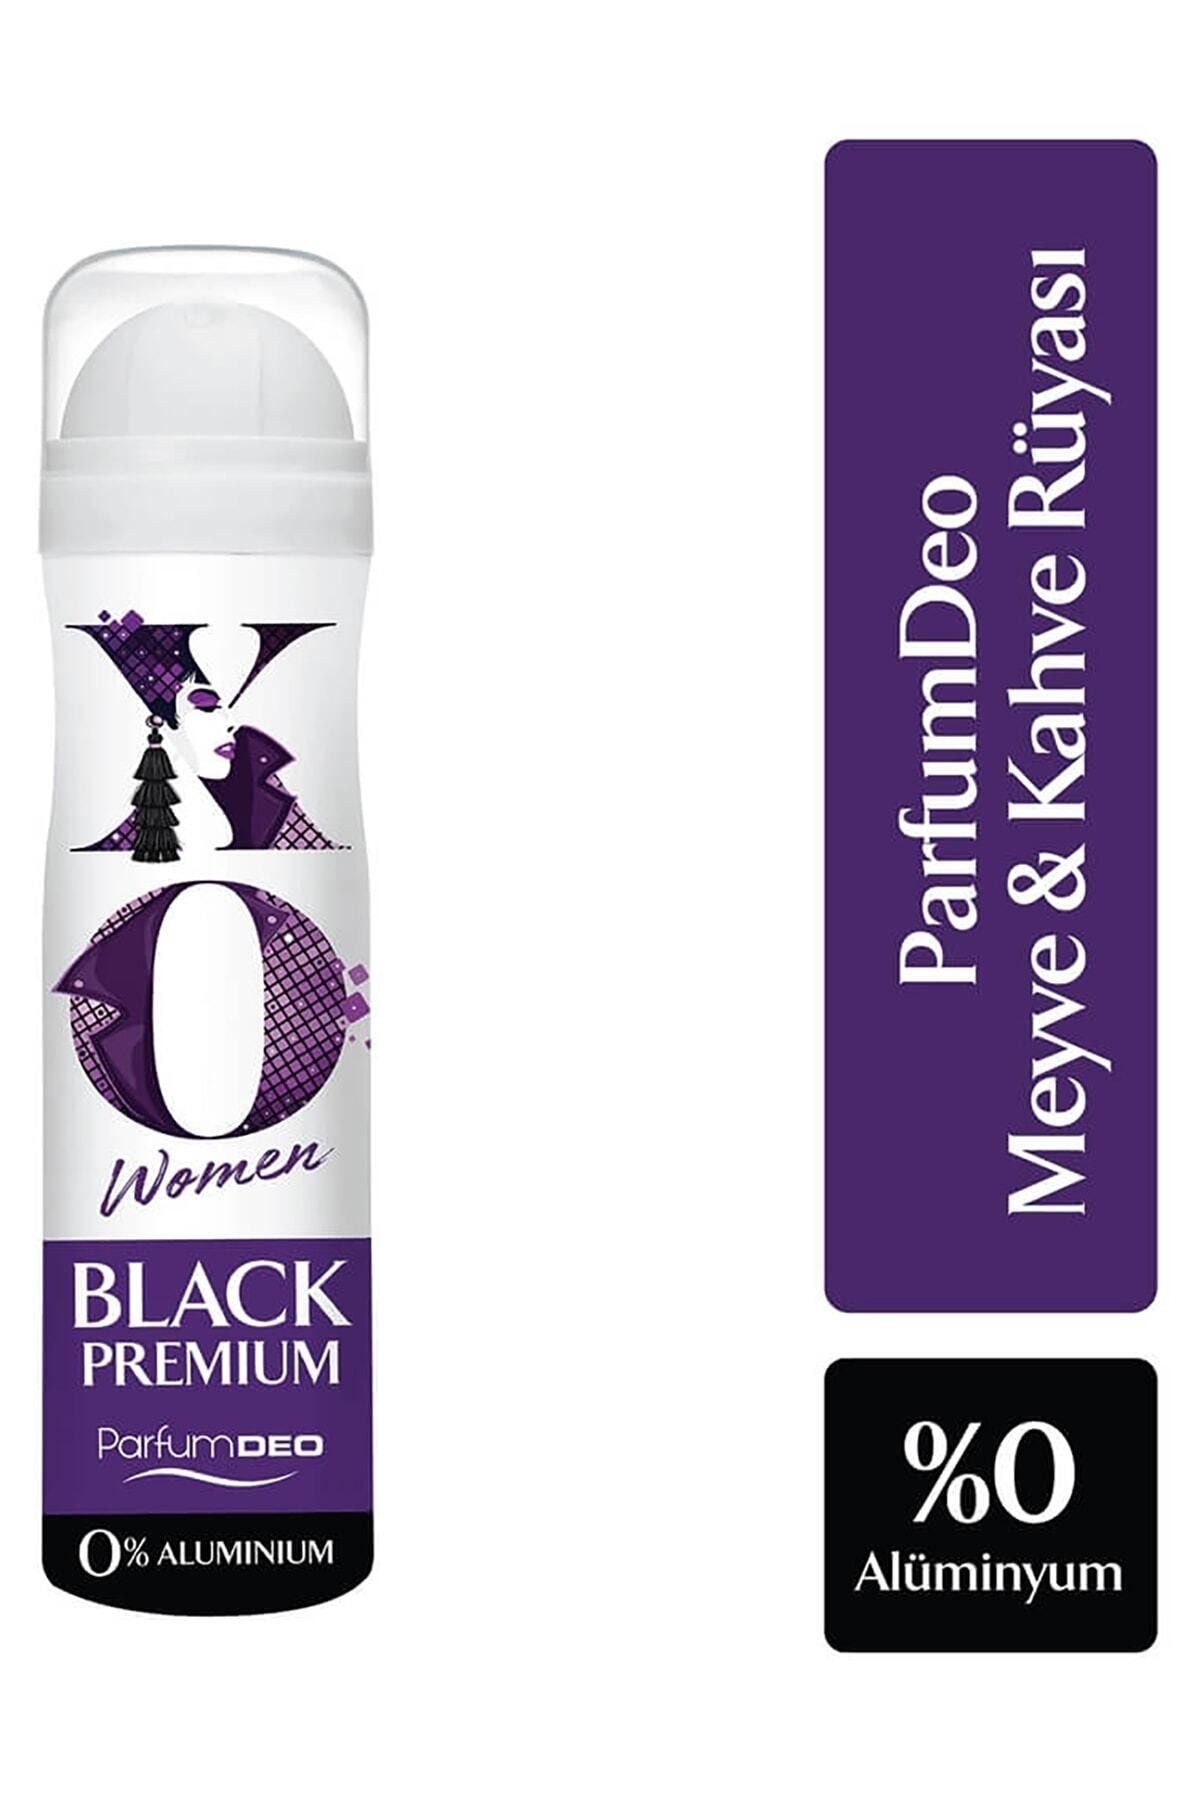 Xo Black Premıum Deodorant